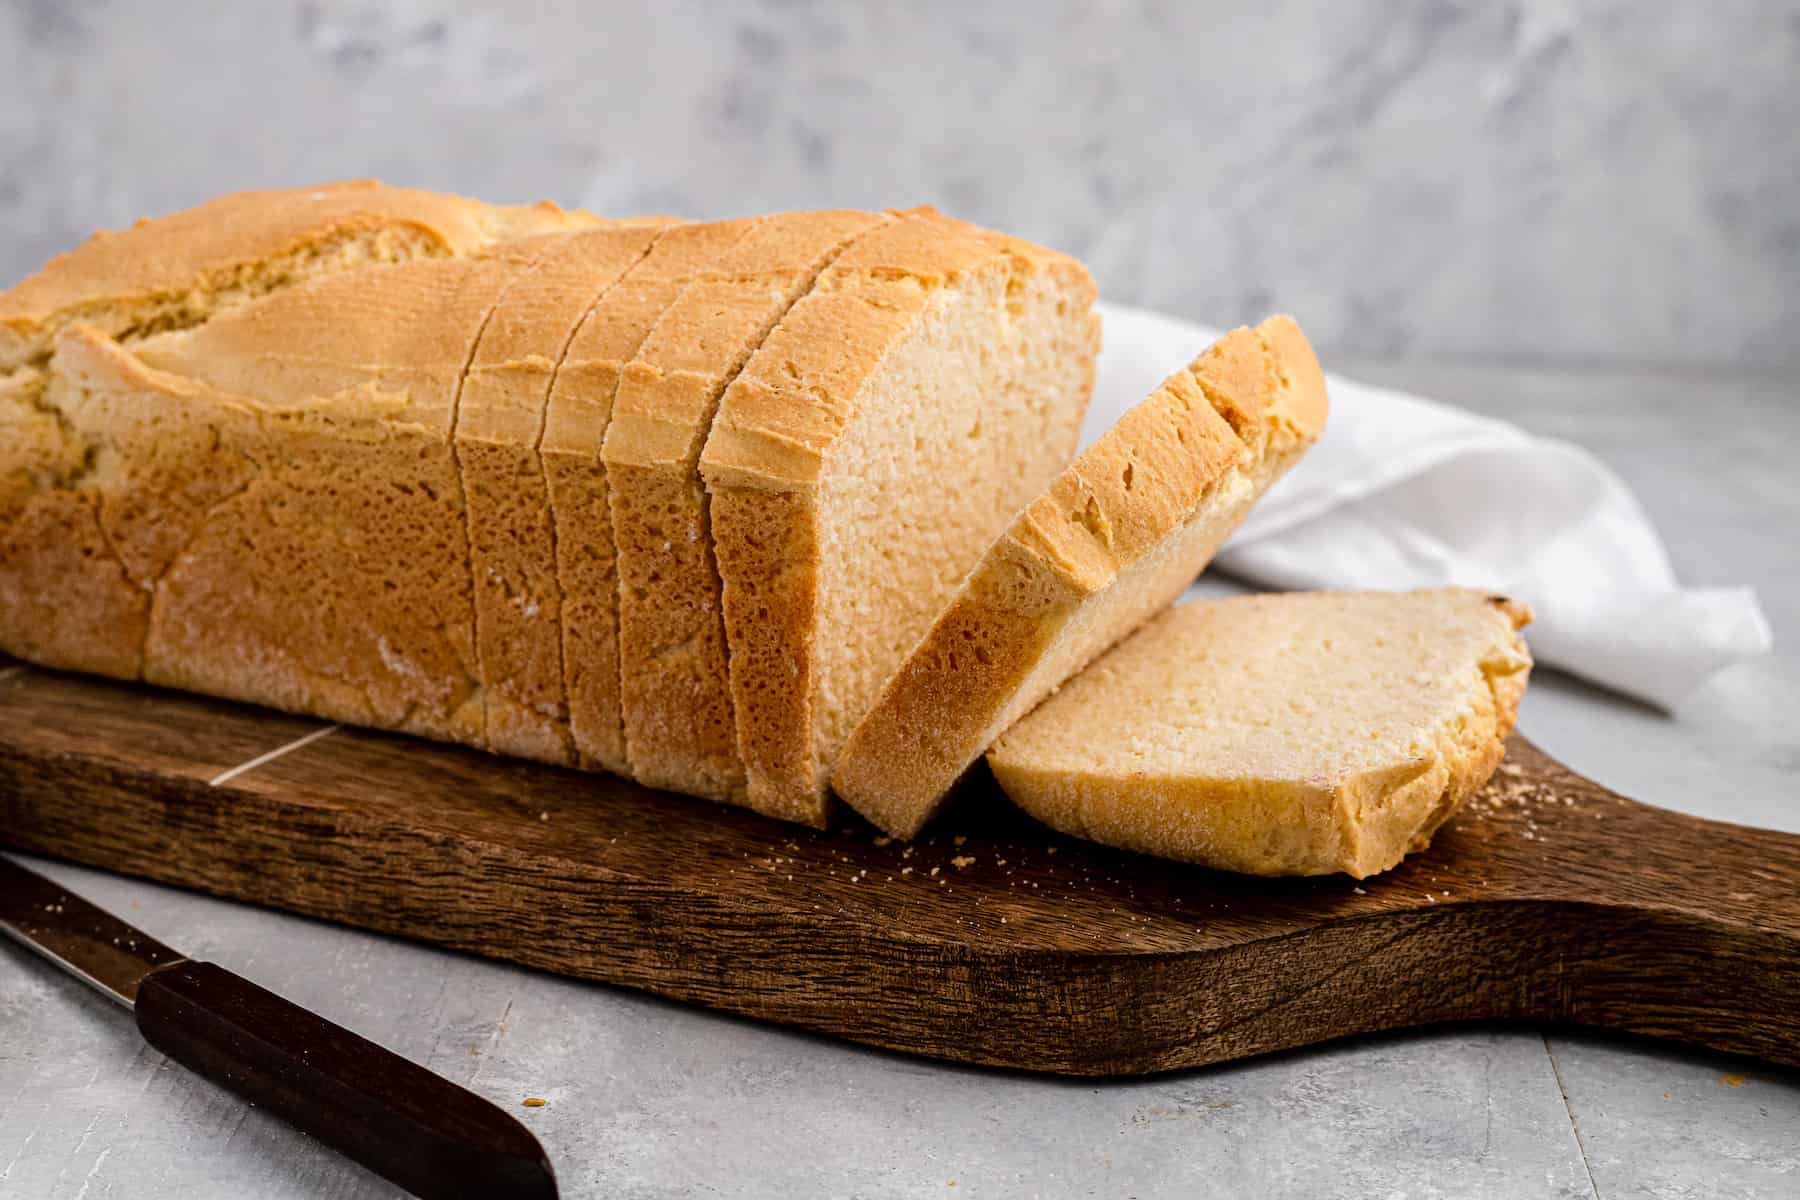 sliced loaf of sandwich bread on a wooden cutting board